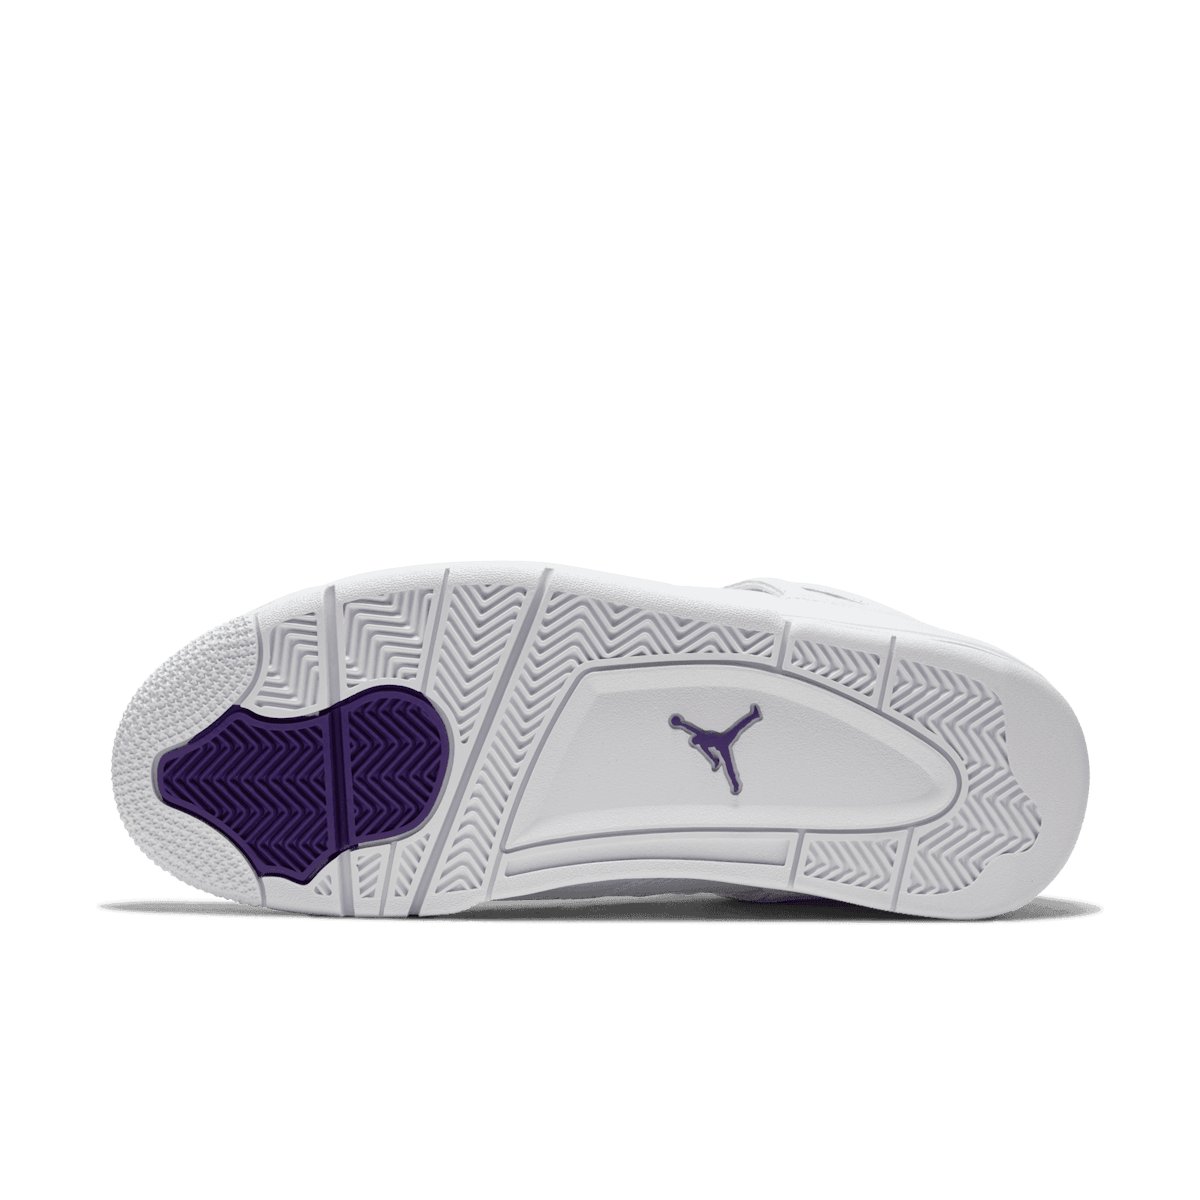 Air Jordan 4 Retro Metallic Purple Angle 0